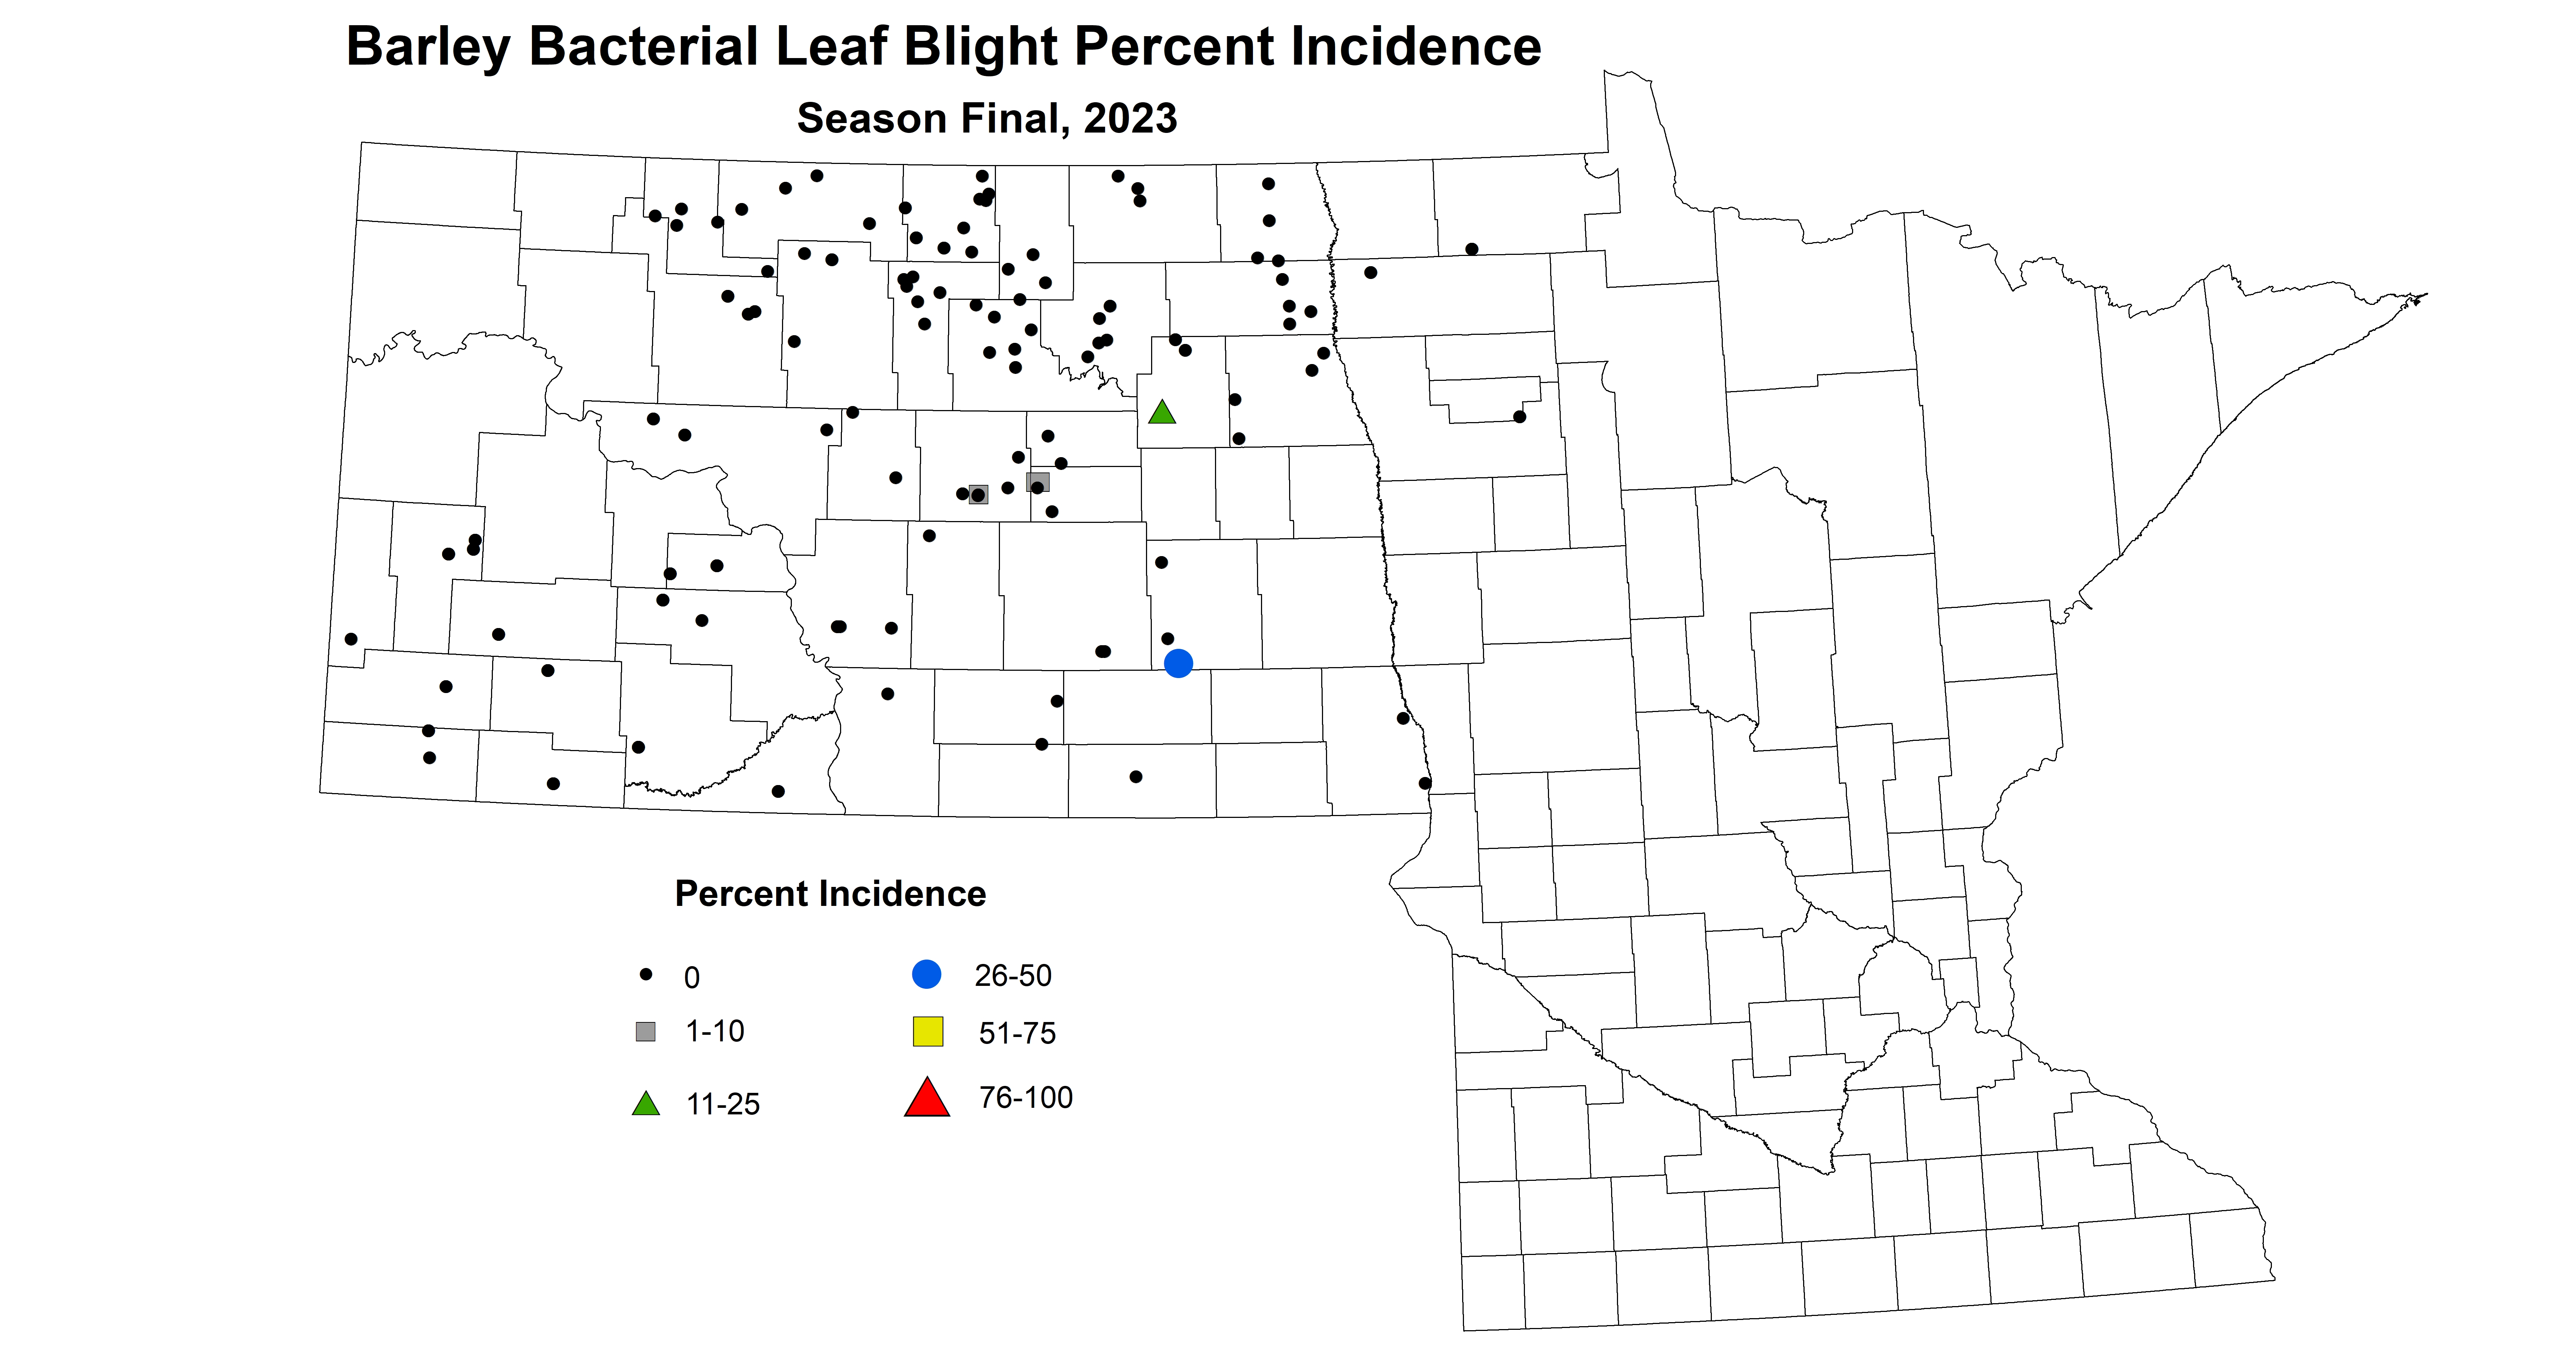 barley bacterial leaf blight percent incidence season final 2023